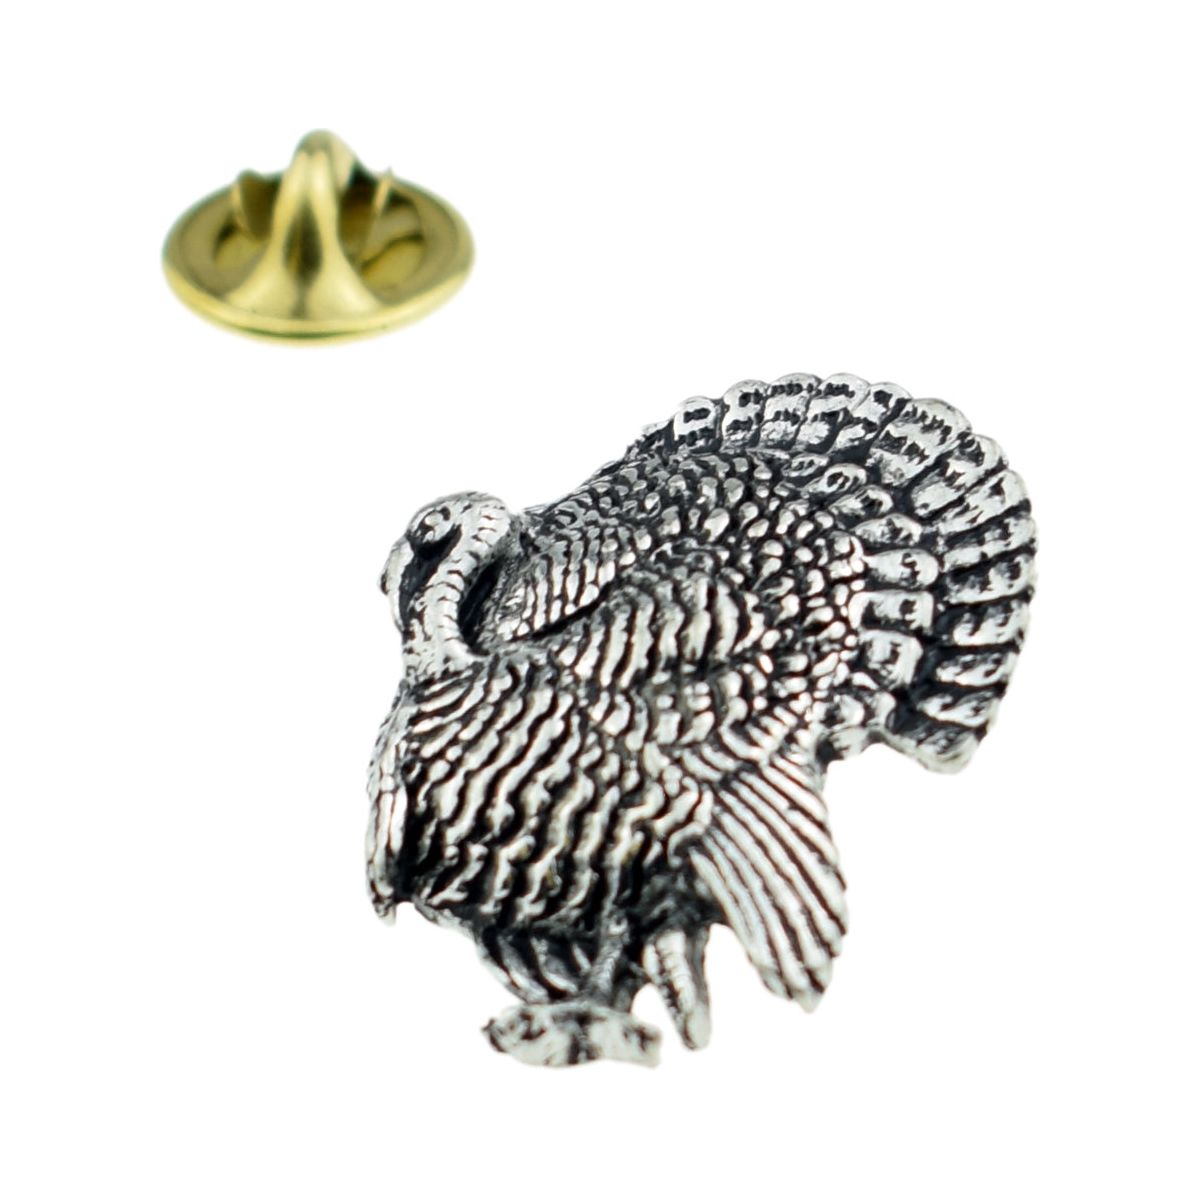 Turkey Bird English Pewter Lapel Pin Badge - Ashton and Finch